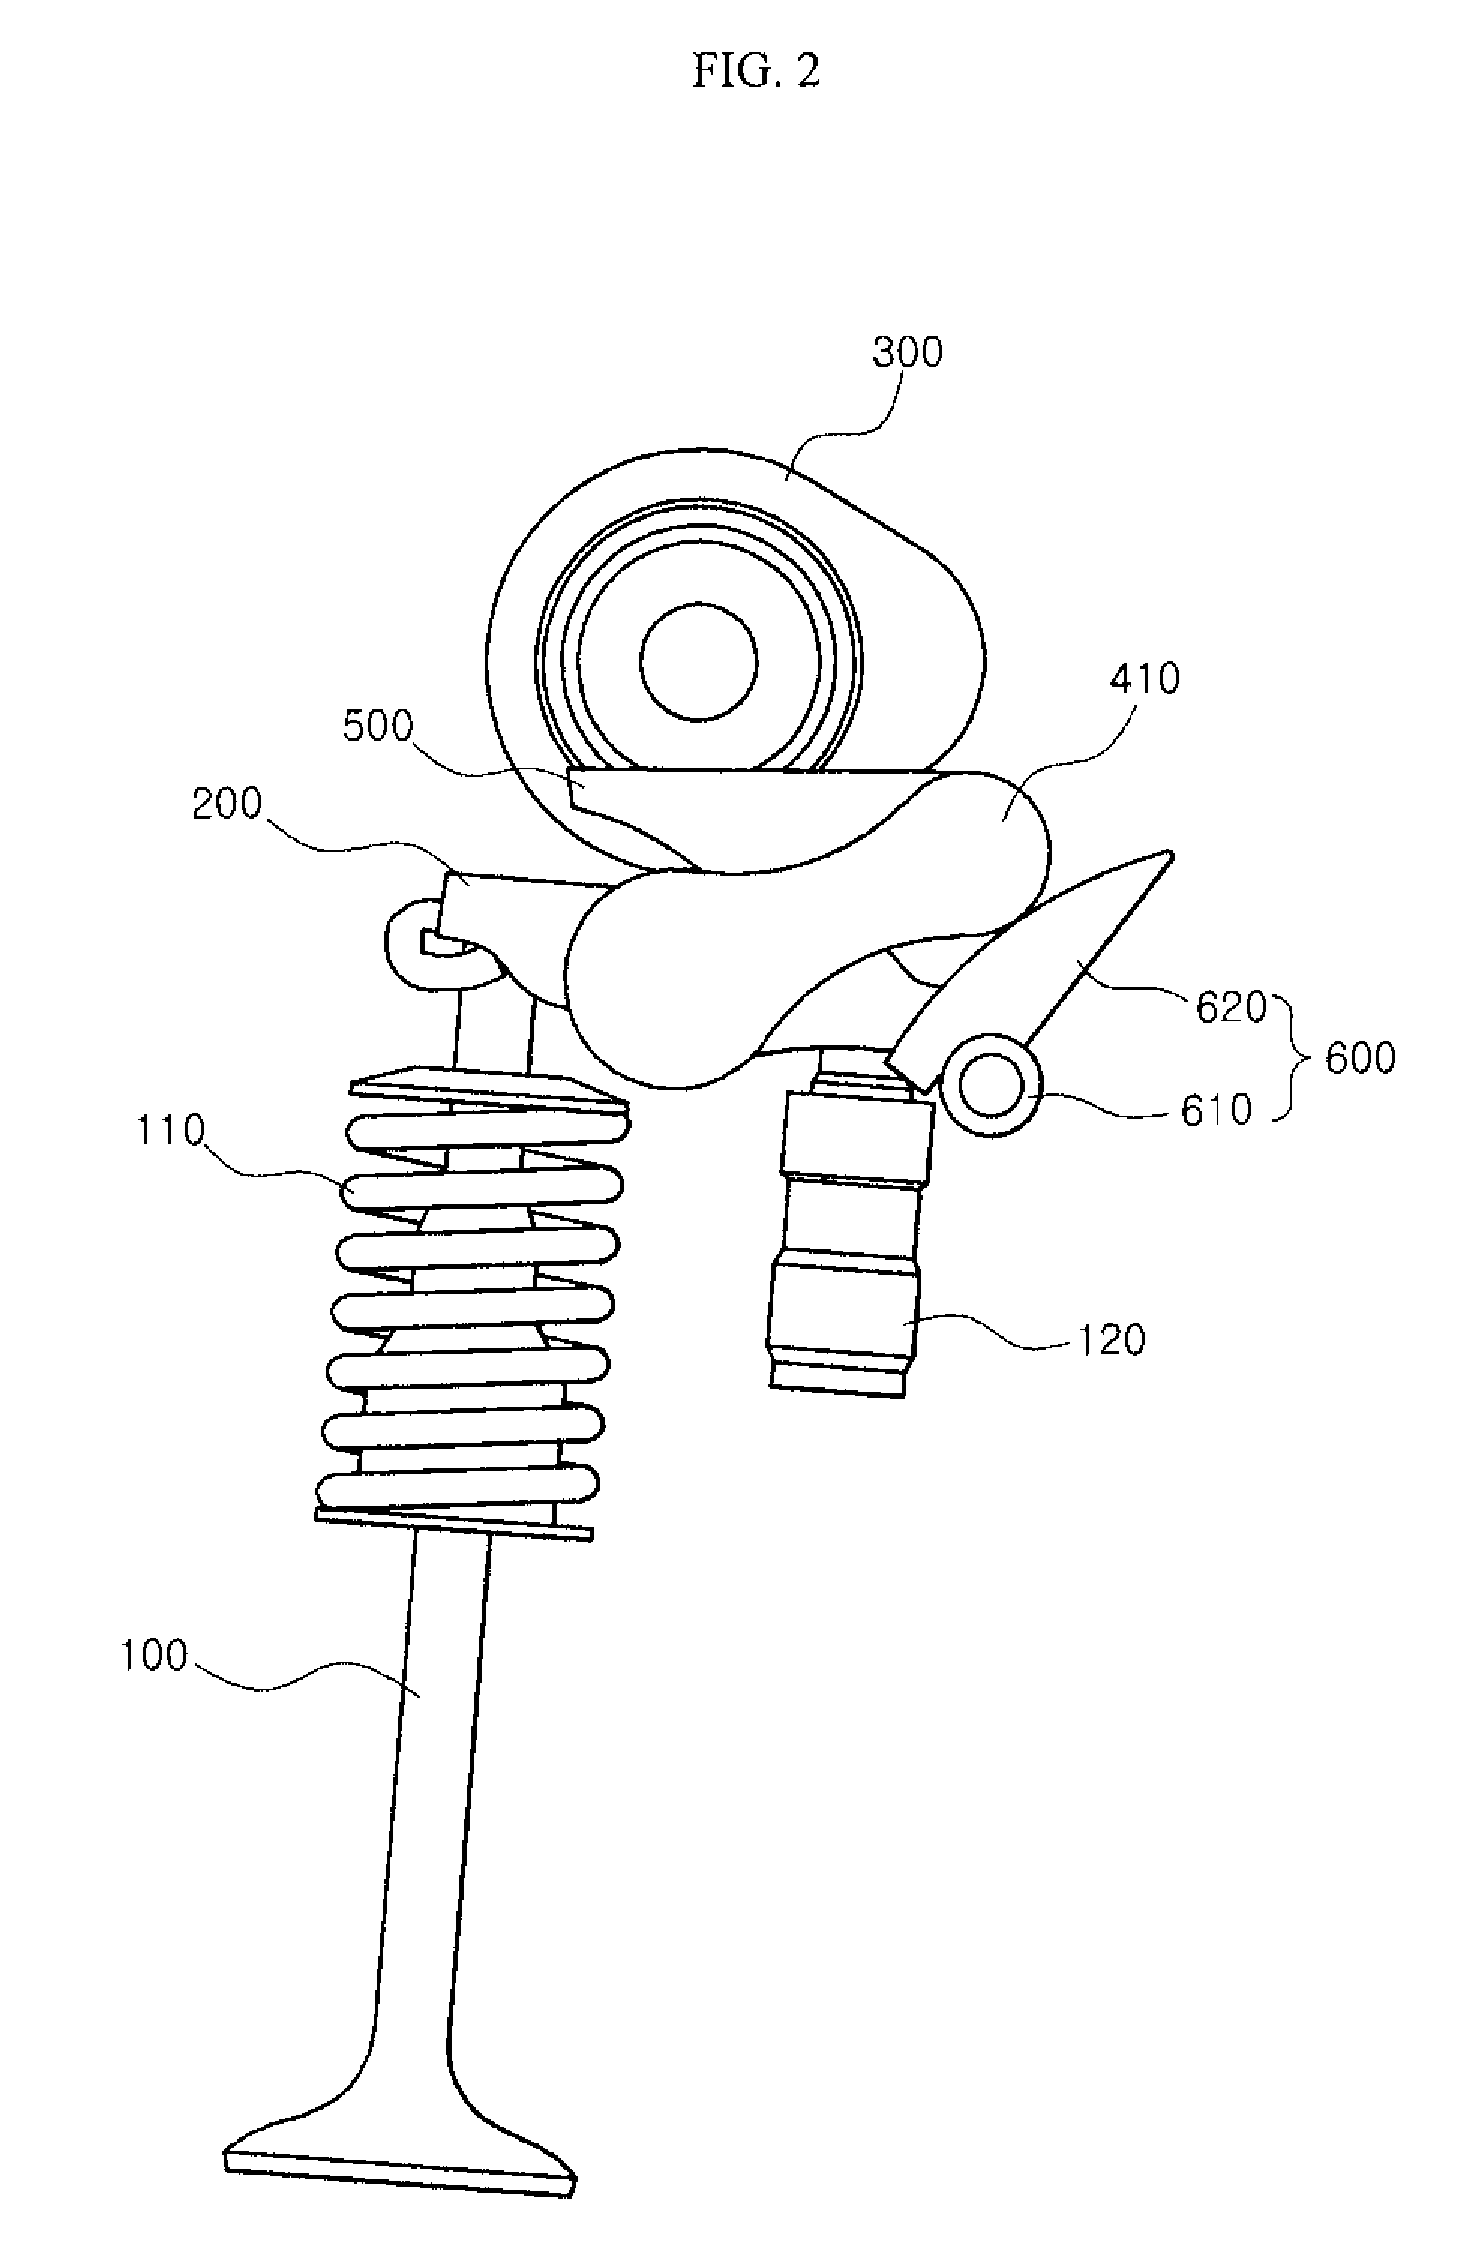 Variable valve actuator